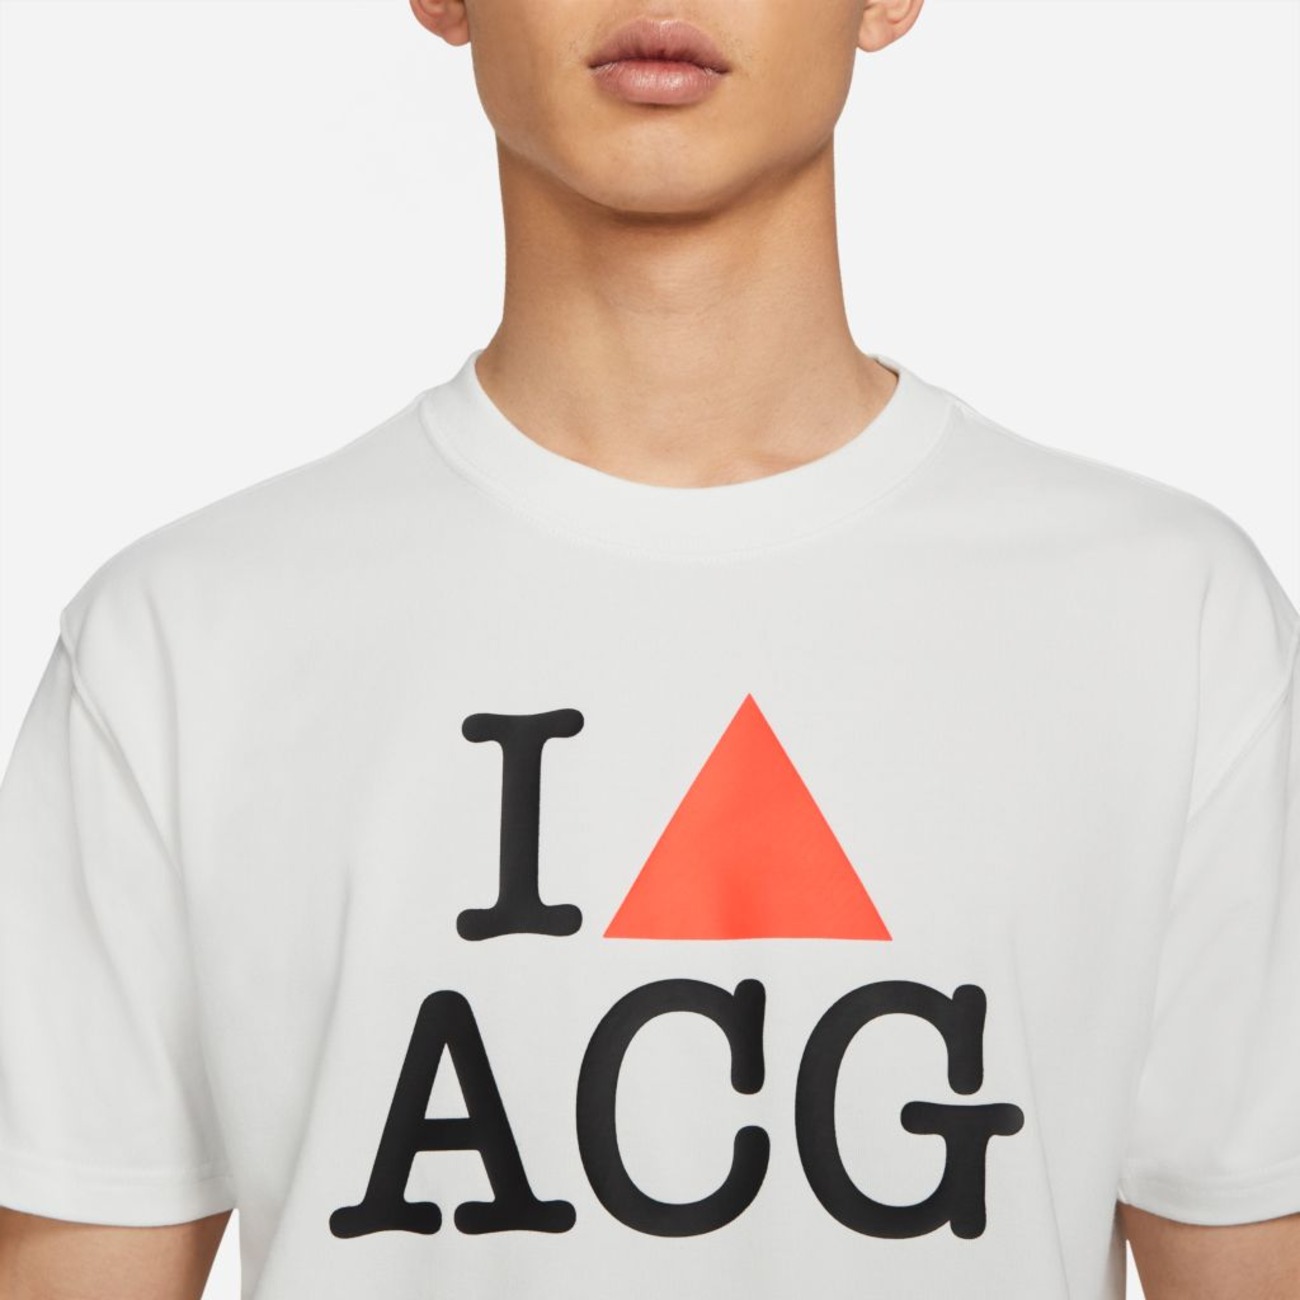 Camiseta Nike ACG Masculina - Foto 3